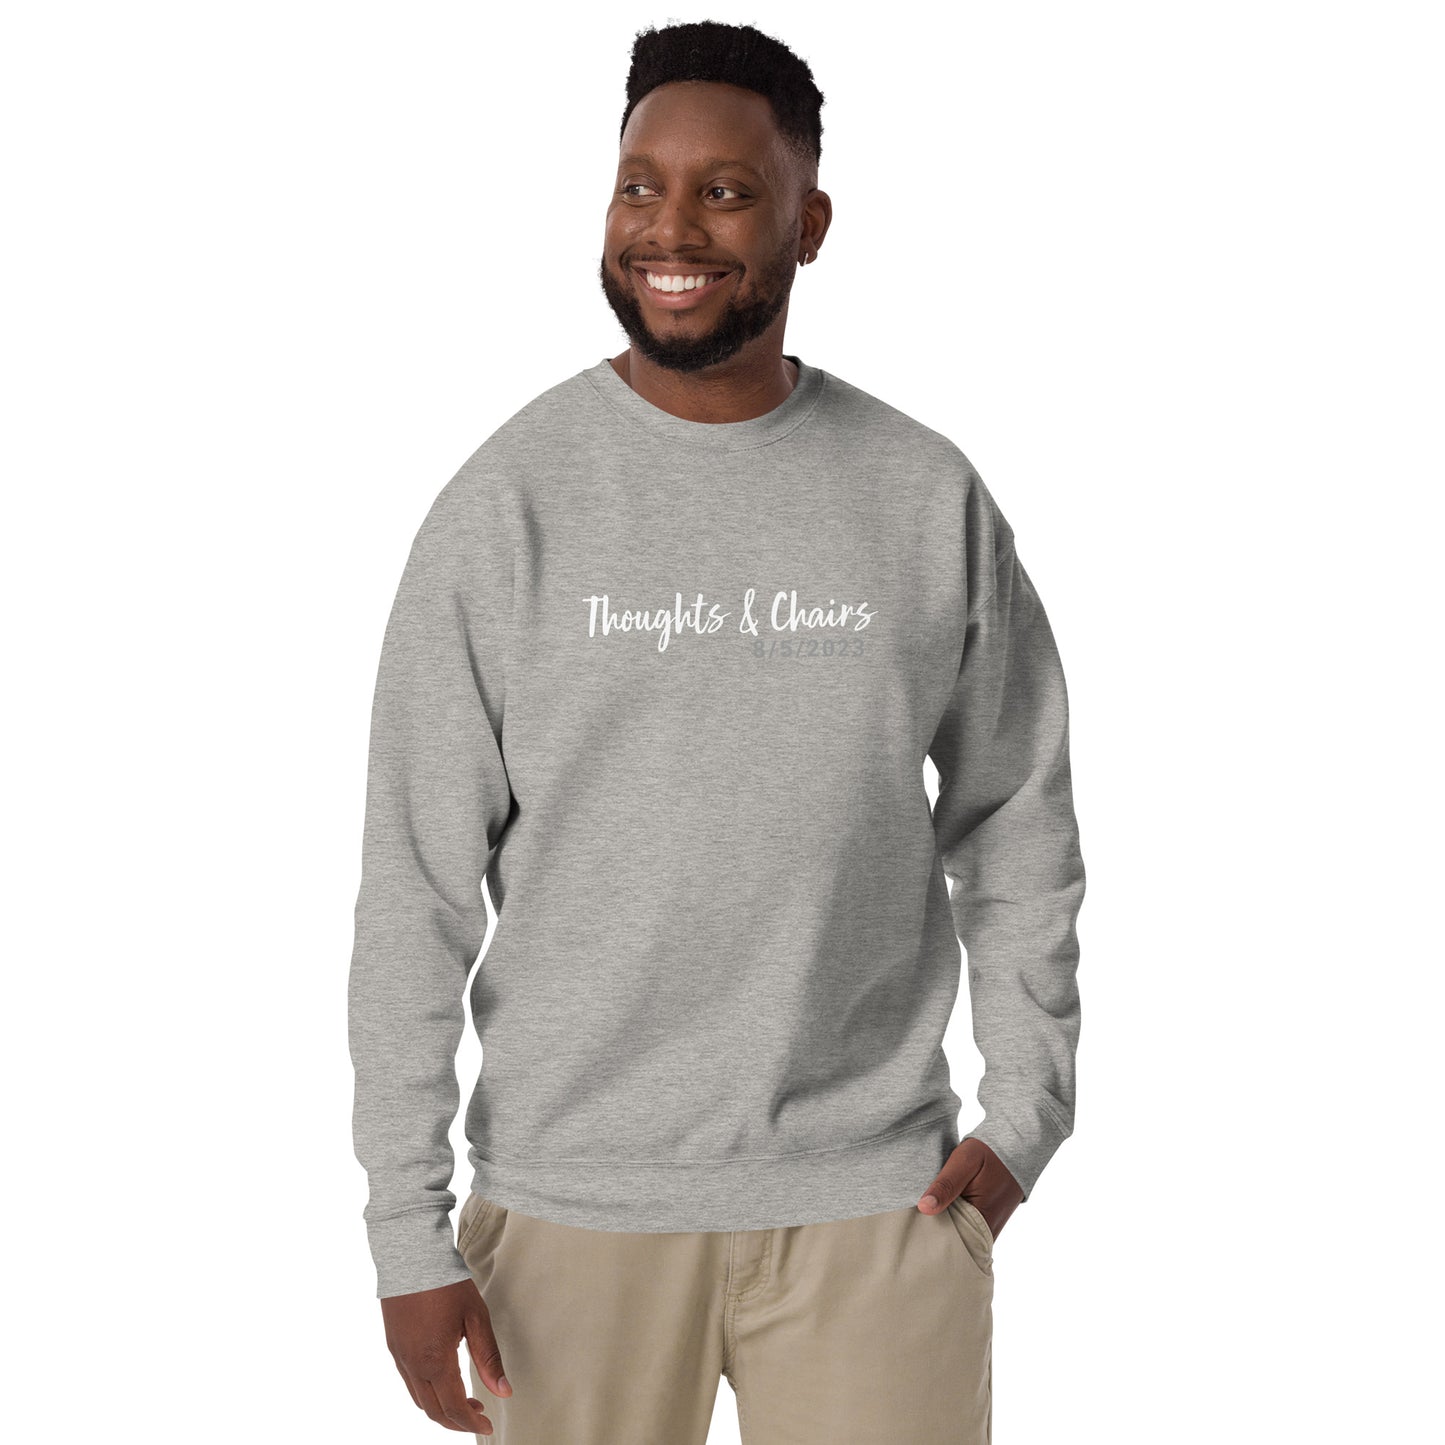 Thoughts & Chairs - Sweatshirt